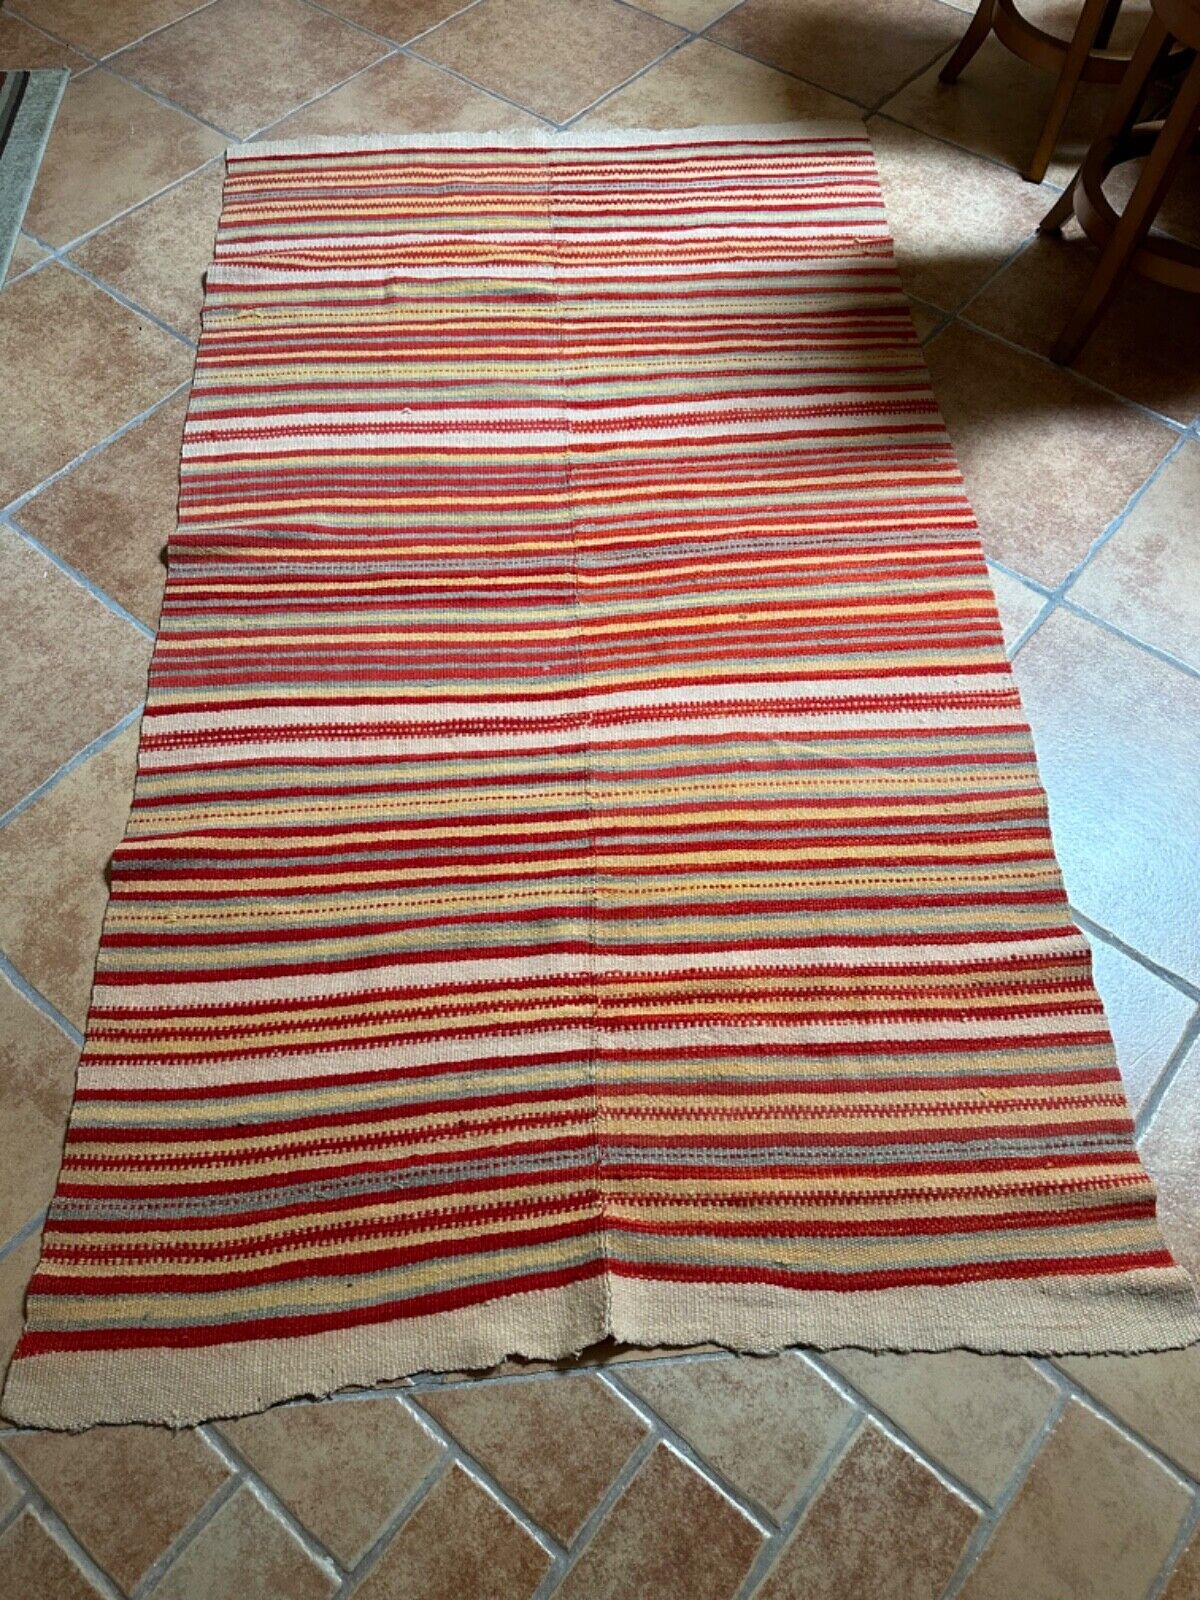 Rio Grande Blanket Hispanic Rug Antique Weaving Wall Tapestry blanket